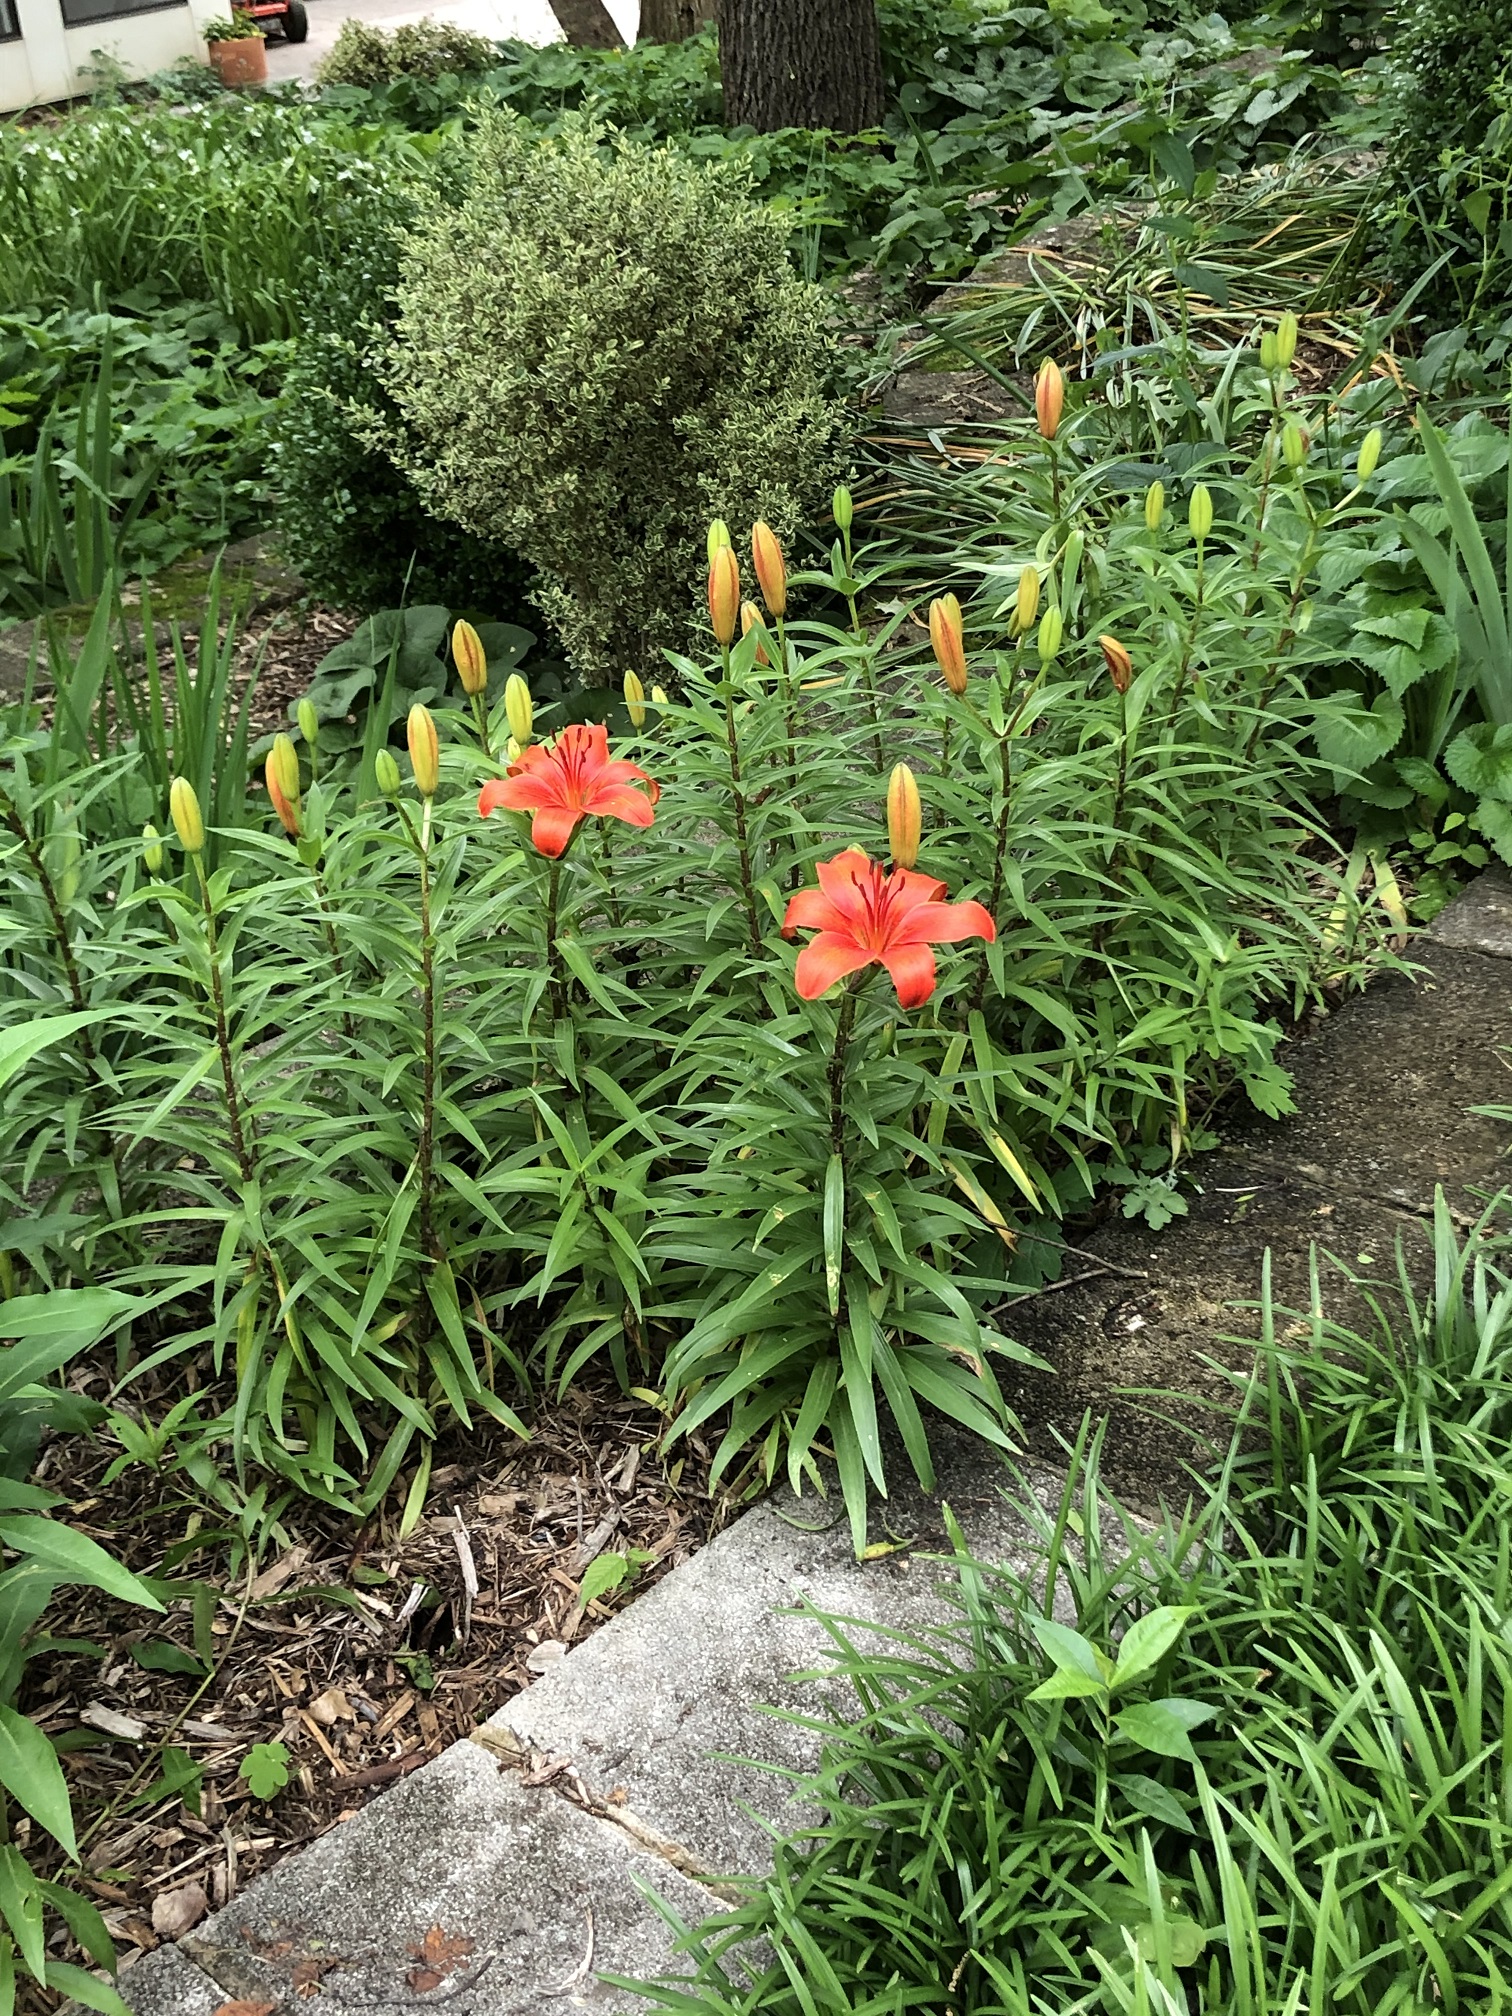 dwarf lilies